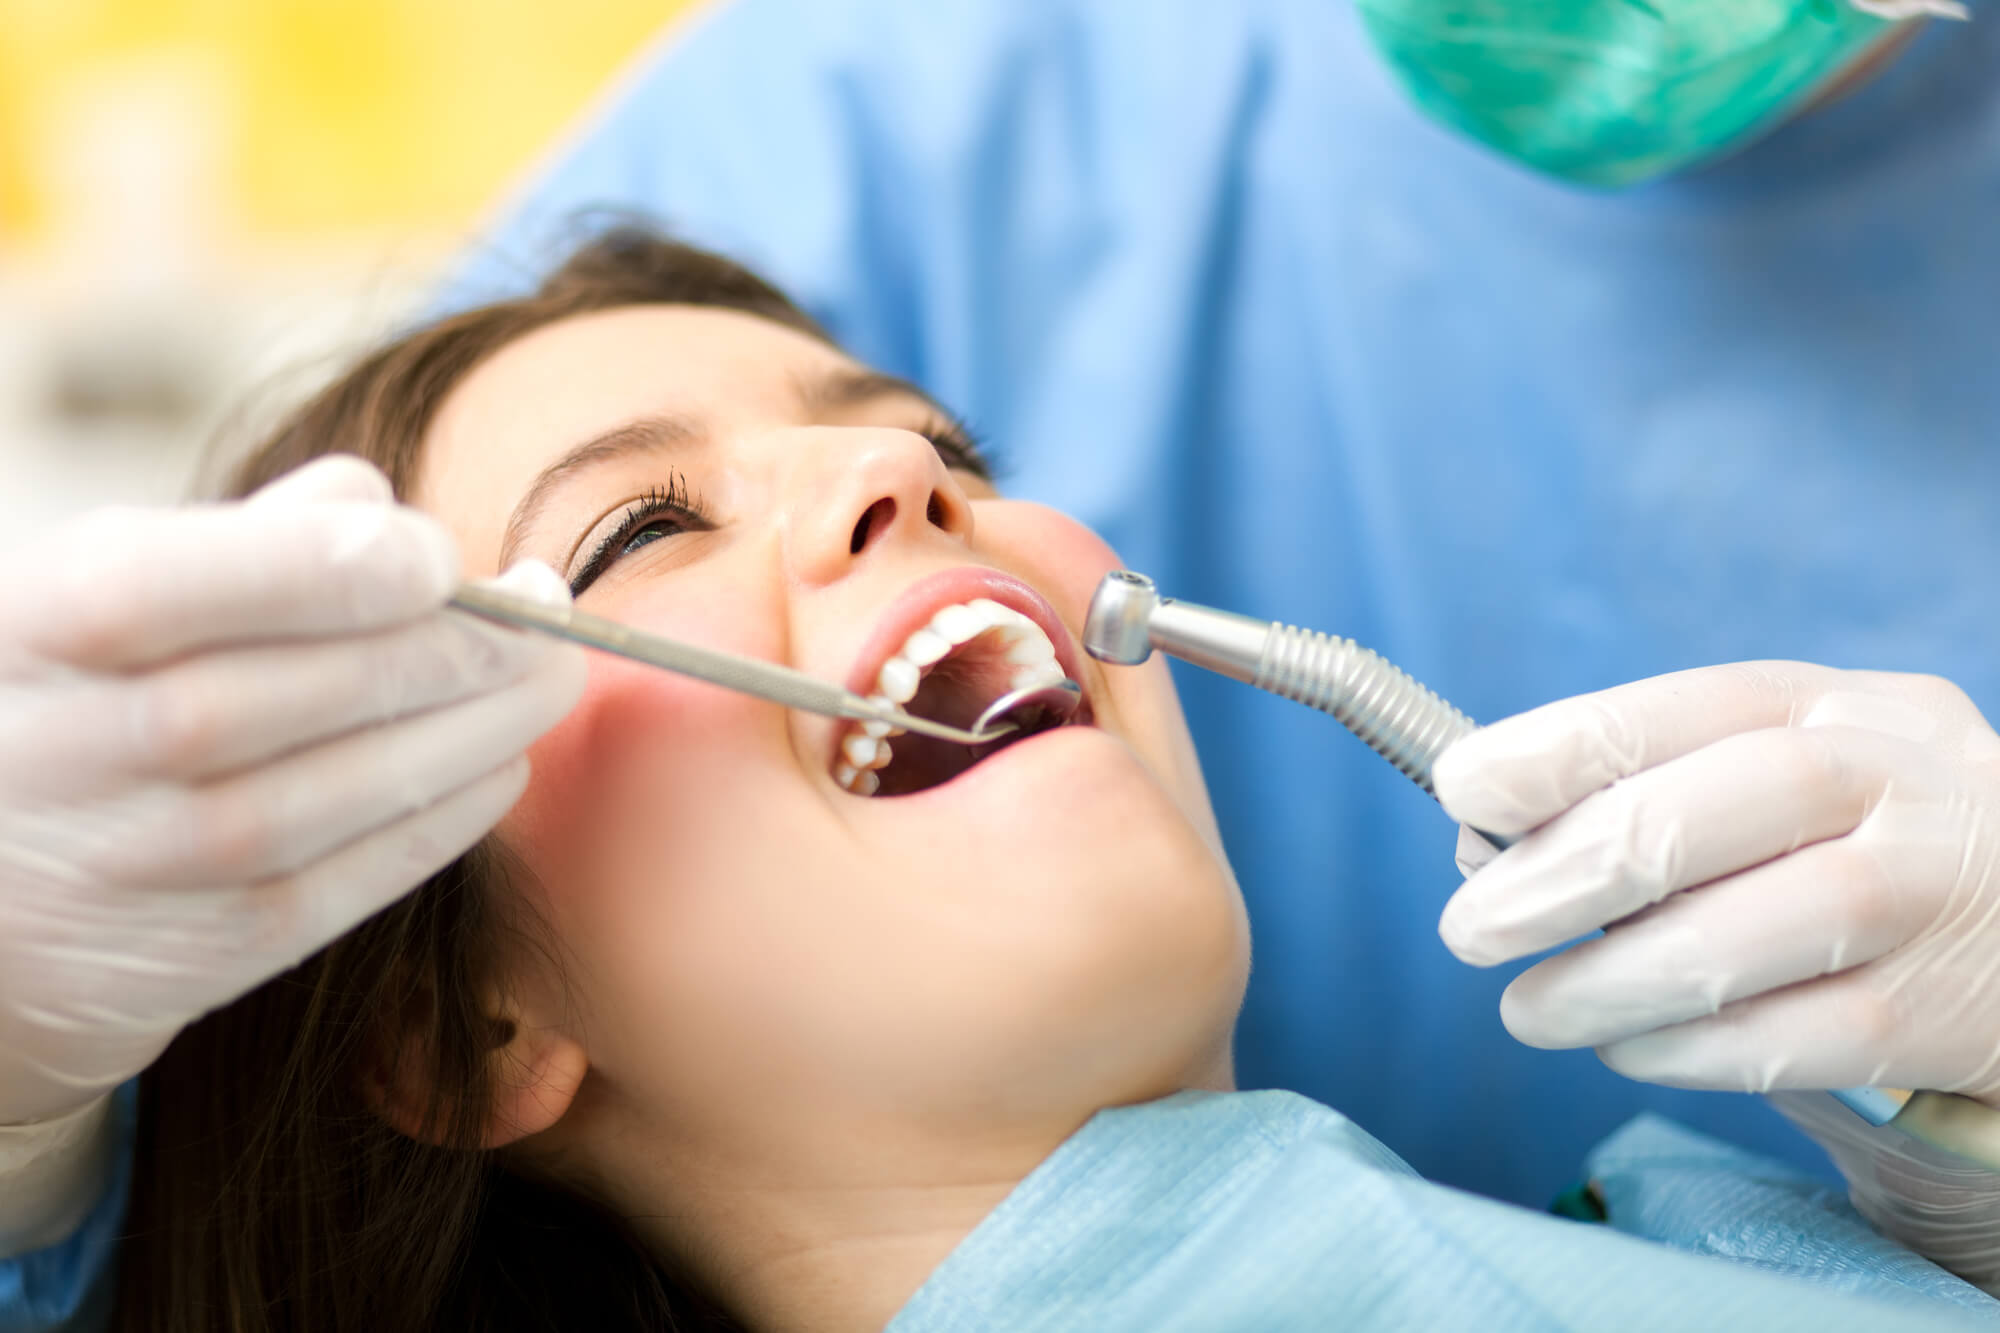 A specialist in Short Pump Endodontics treating a female patient